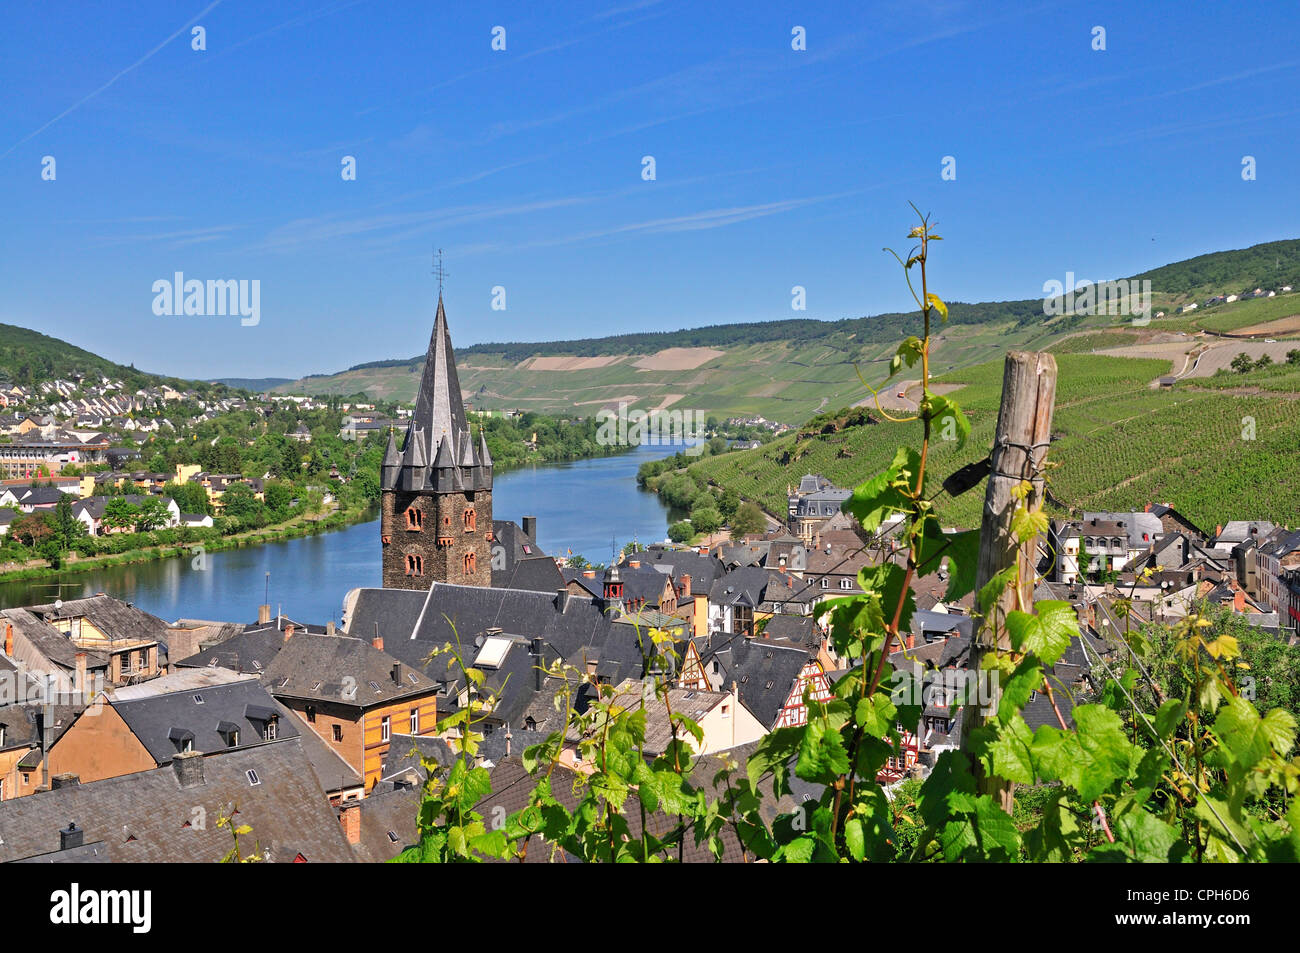 Bernkastel, Germany, Europe, Kues, Michael, Palatinate, parish church, Rhineland, wine, wine cultivation, wine-growing, vineyard Stock Photo